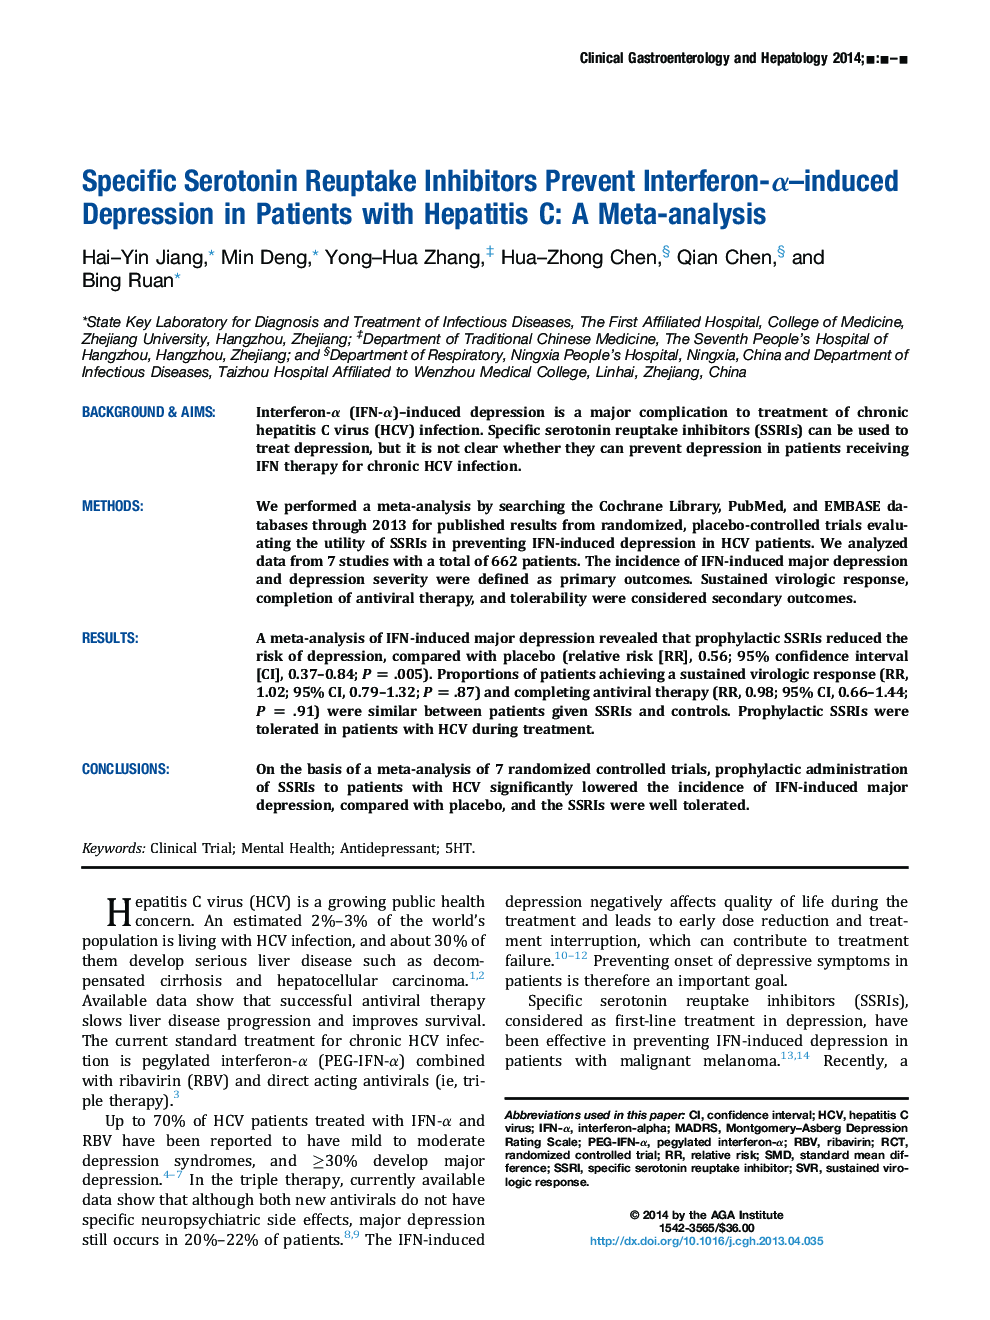 Specific Serotonin Reuptake Inhibitors Prevent Interferon-Î±-Induced Depression in Patients With Hepatitis C: A Meta-analysis